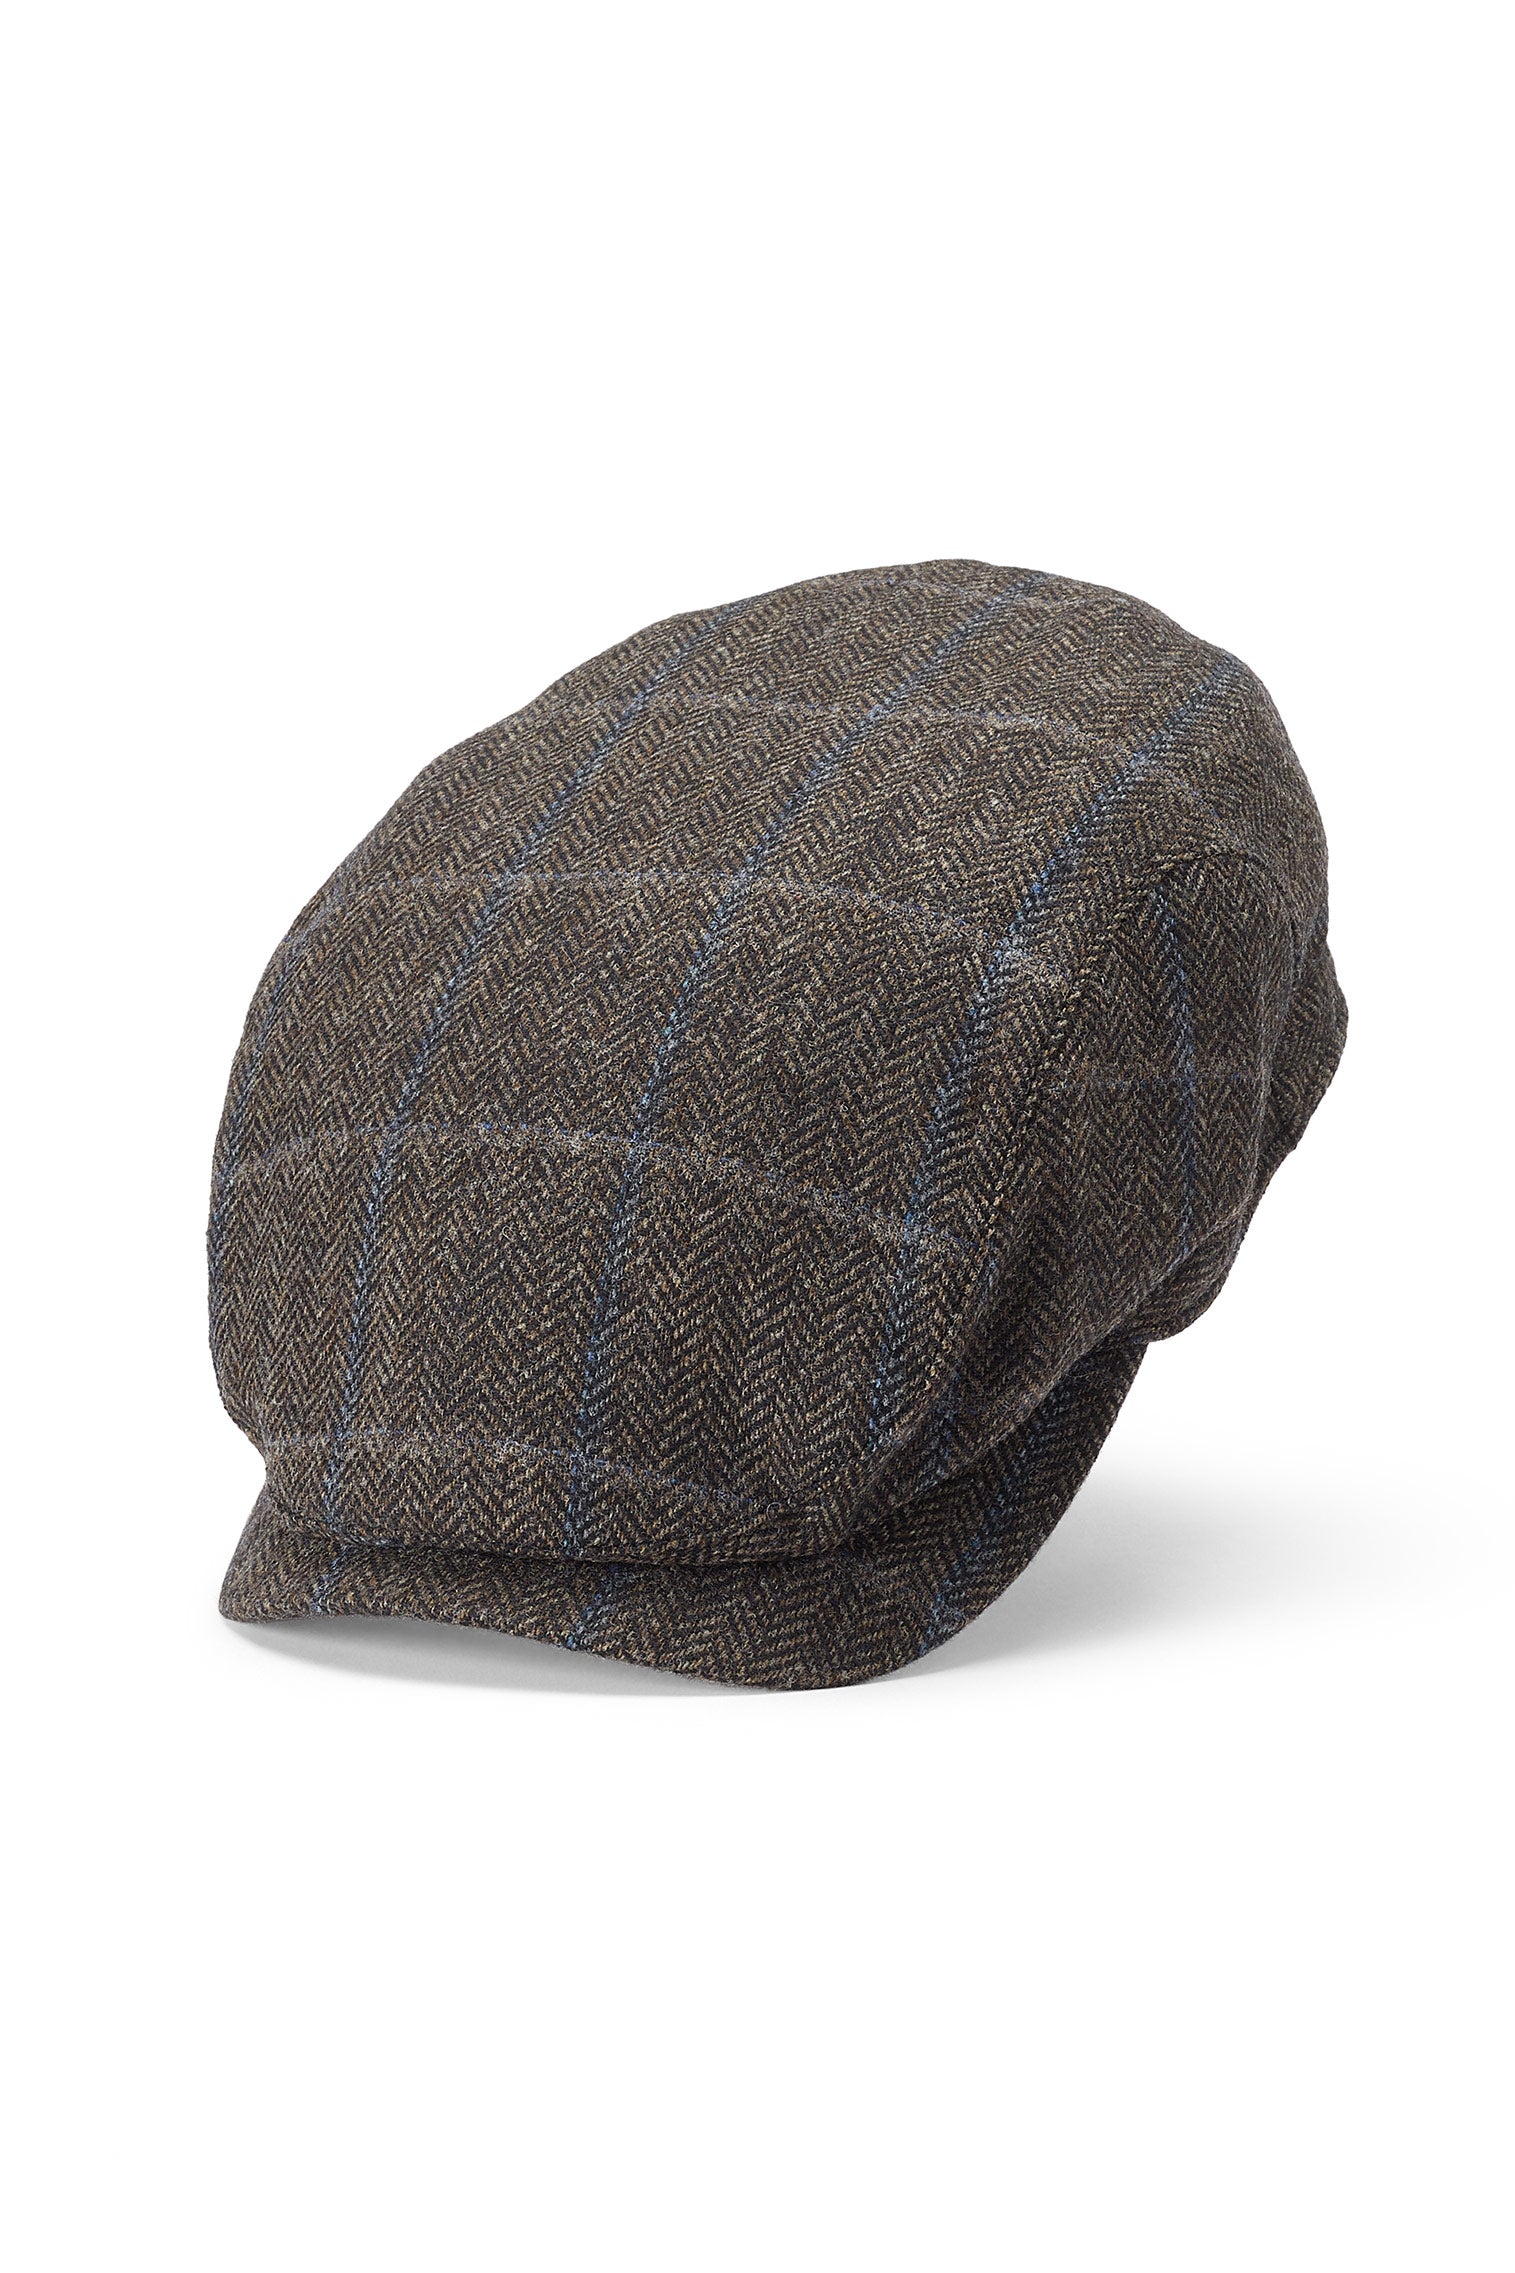 Lynton Brown Flat Cap - Hats for Slimmer Frames - Lock & Co. Hatters London UK